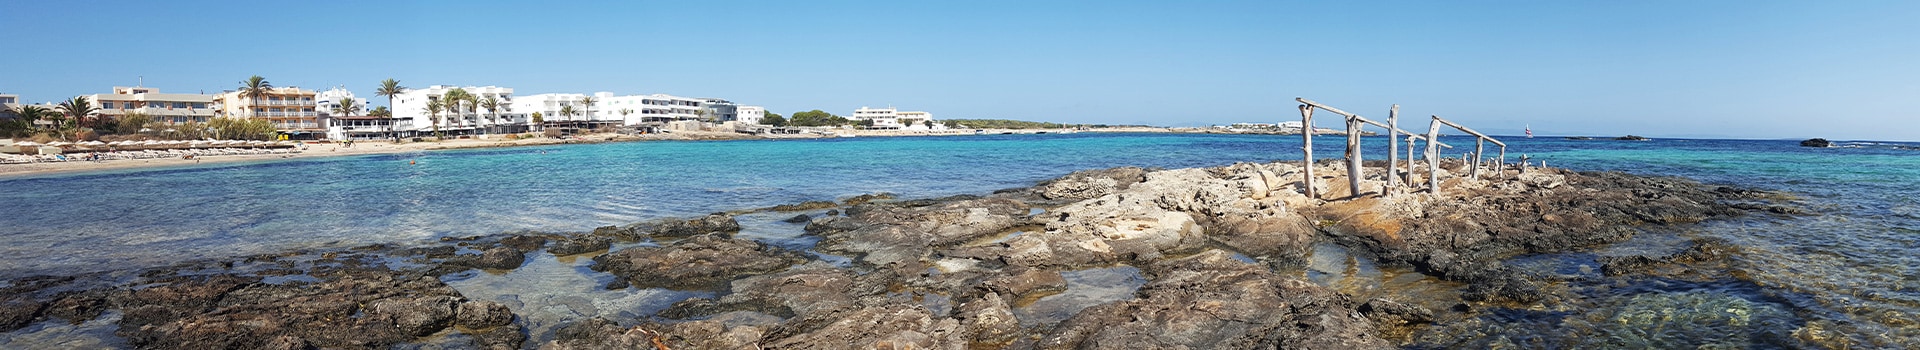 Billetes de Barco de Ibiza (ciudad) a Formentera